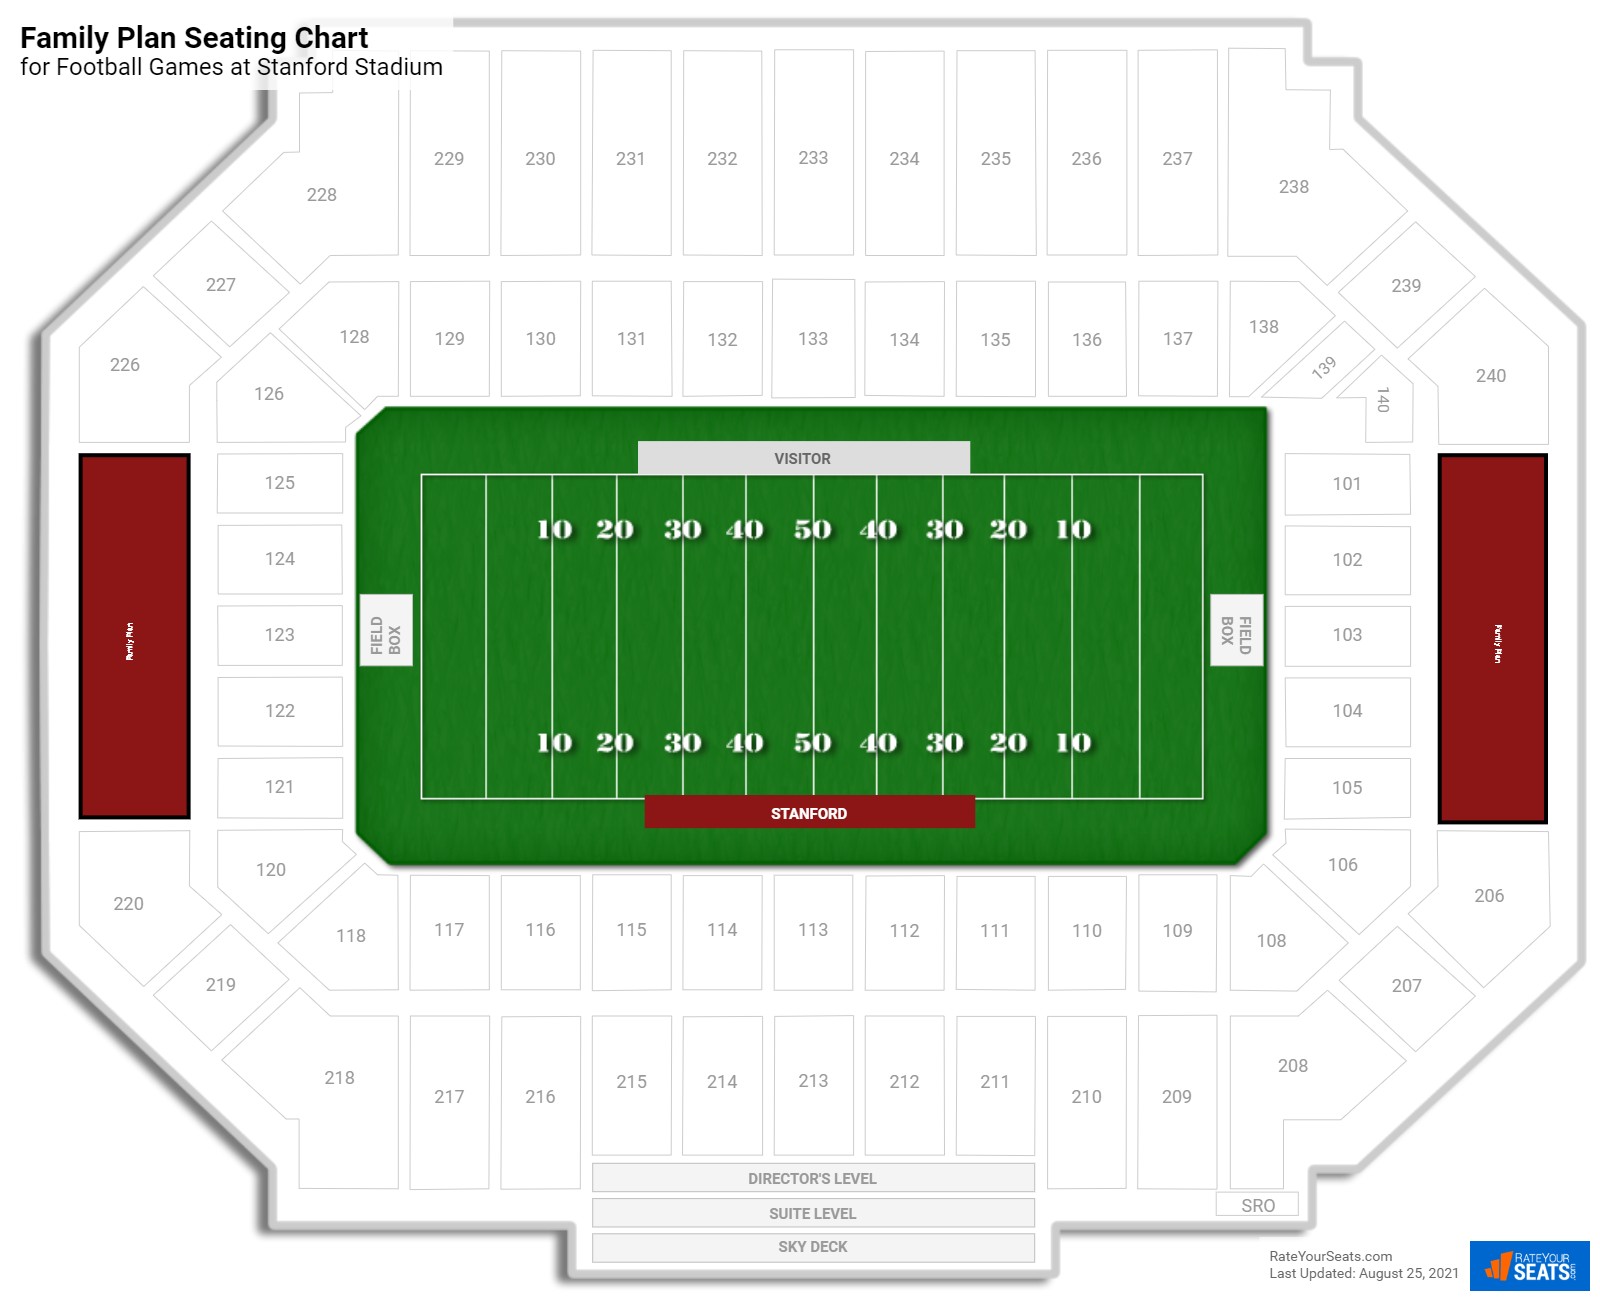 Football Family Plan Seating Chart at Stanford Stadium